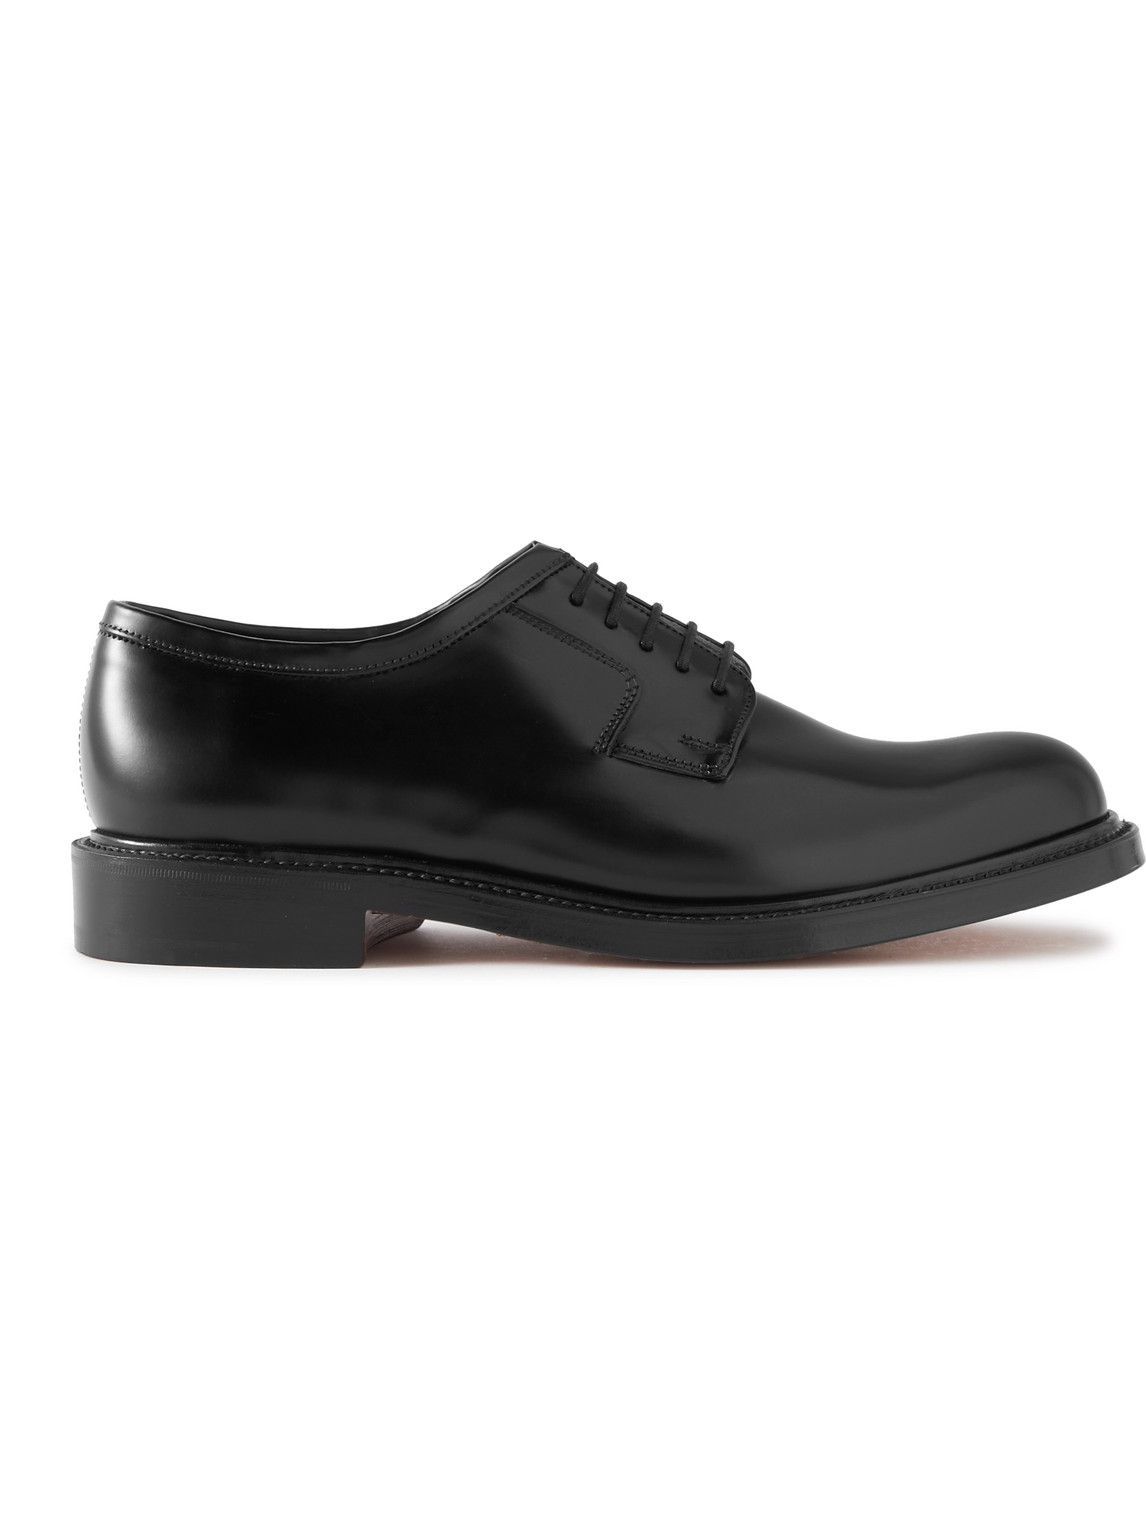 Grenson - Camden Leather Derby Shoes - Black Grenson